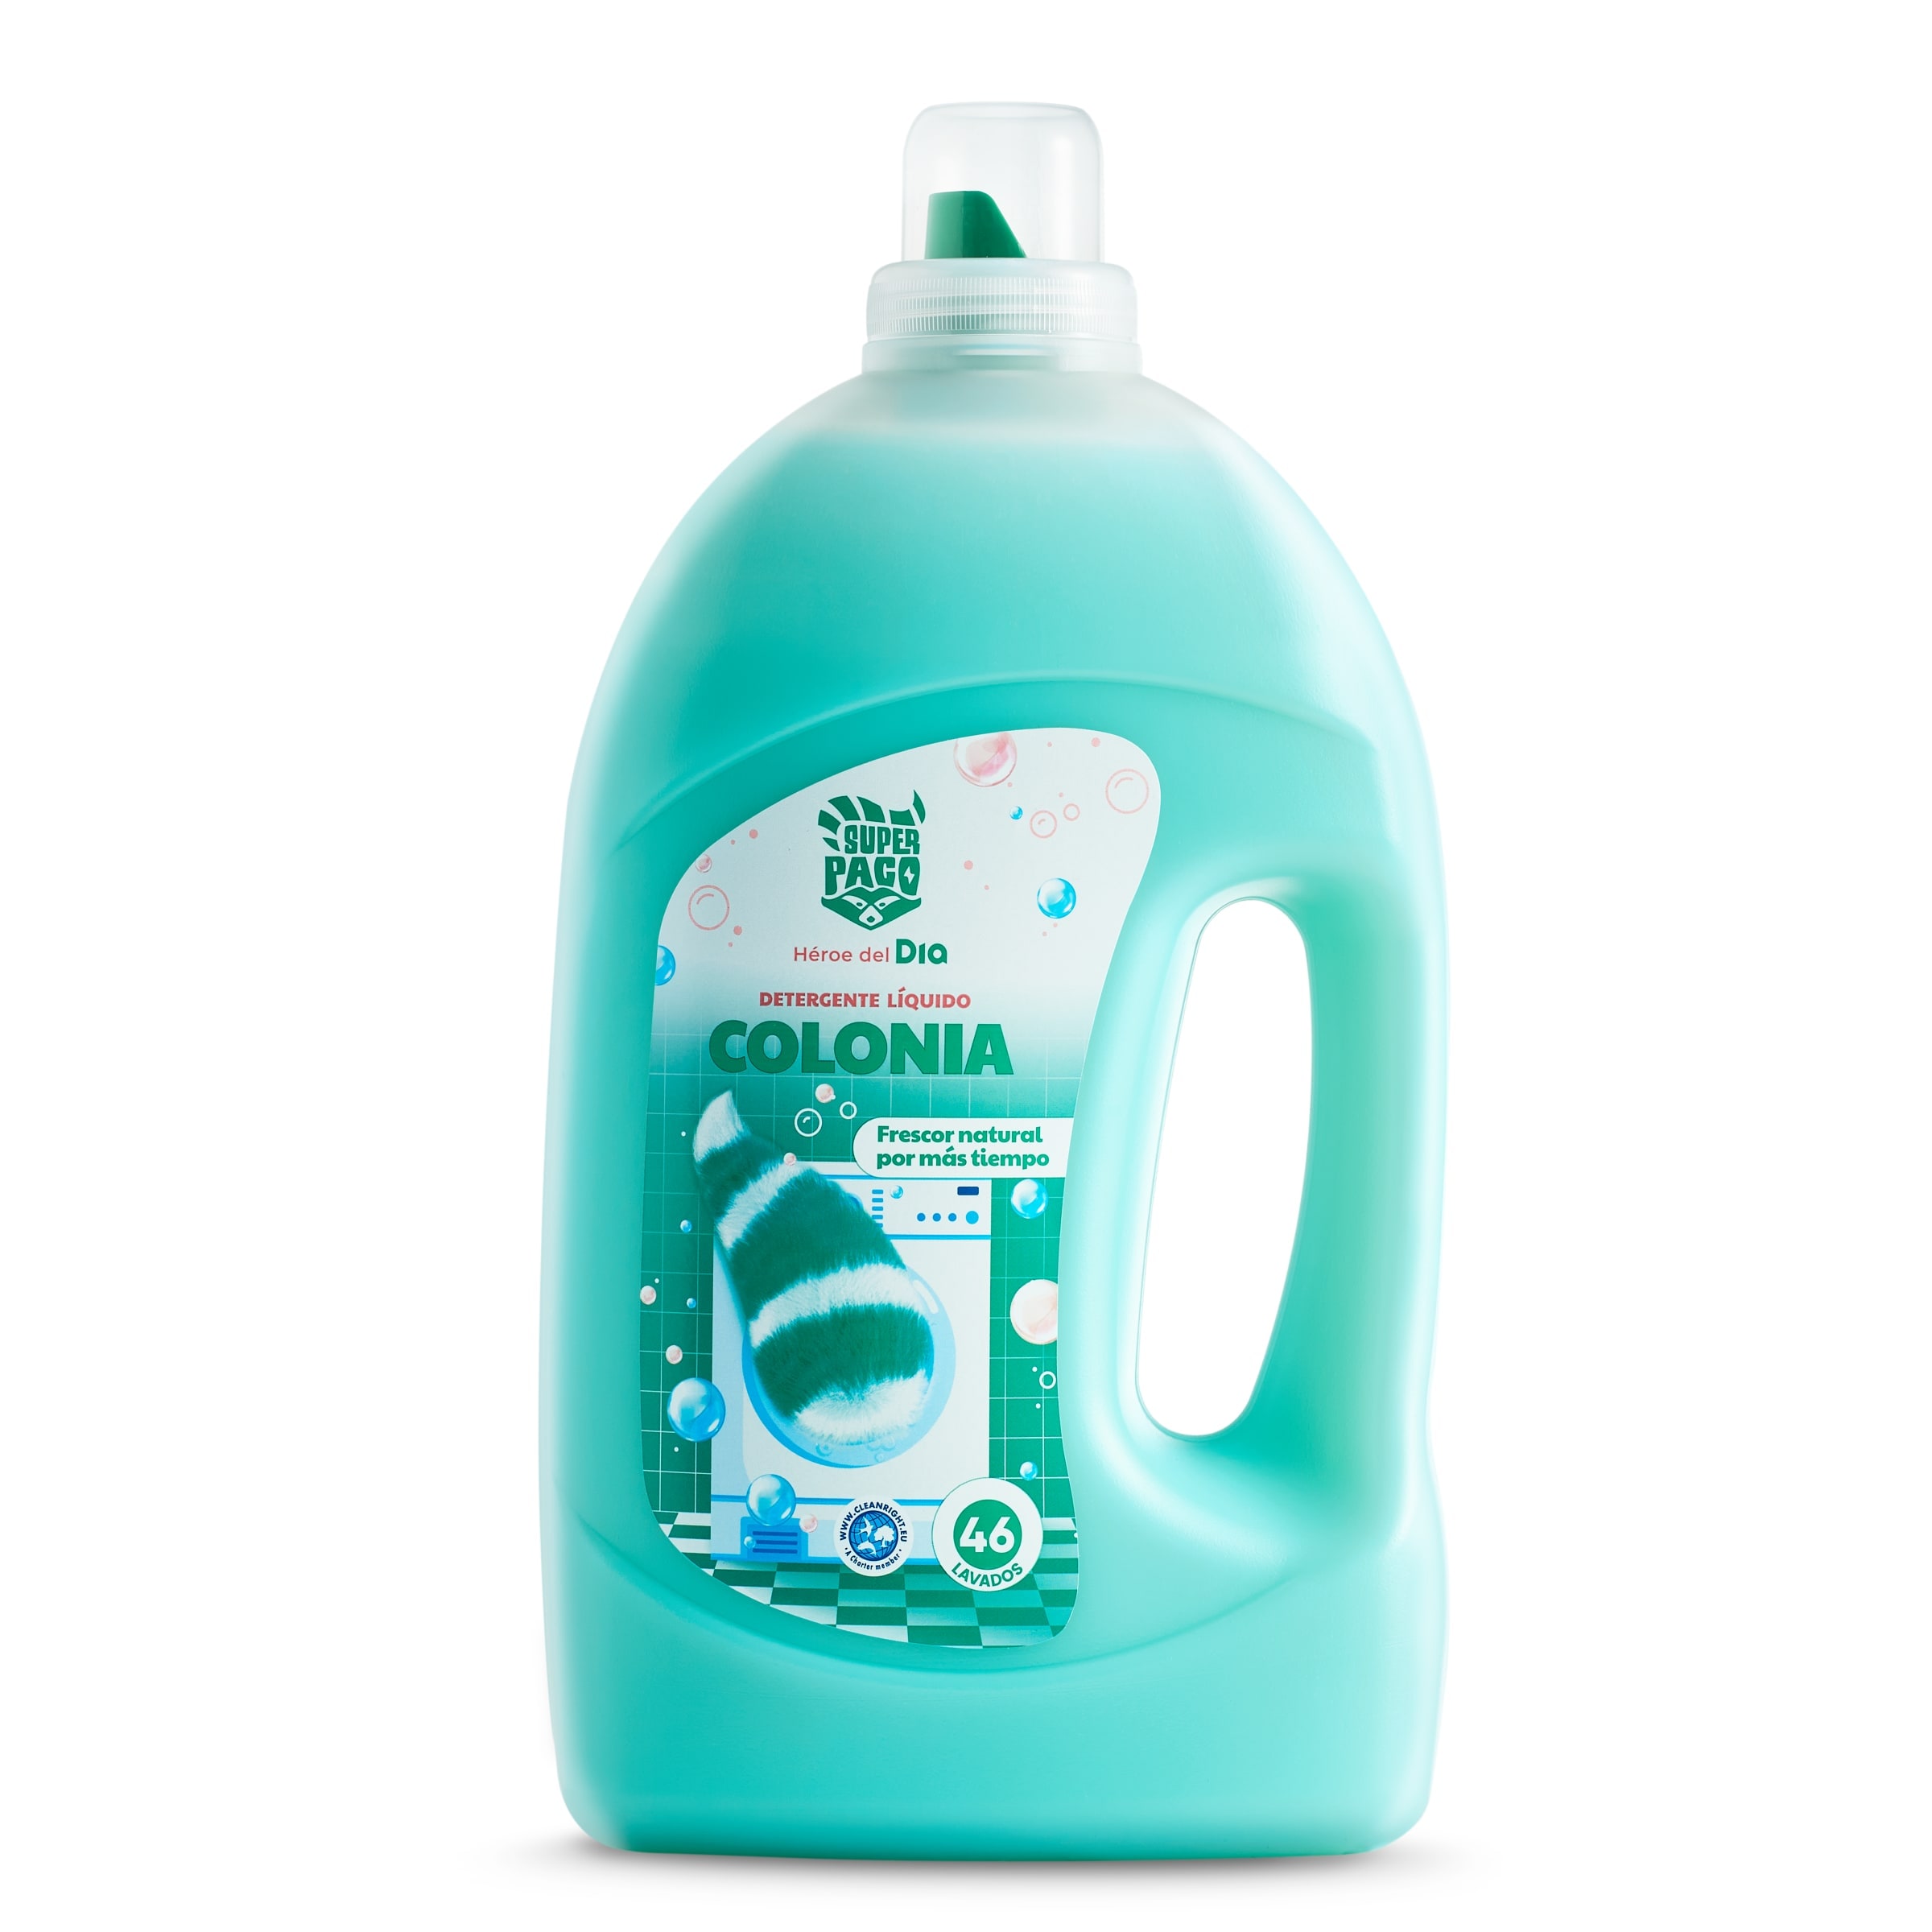 Bosque Verde Detergente lavadora liquido frescor colonia Botella 3 l (46  lavados)